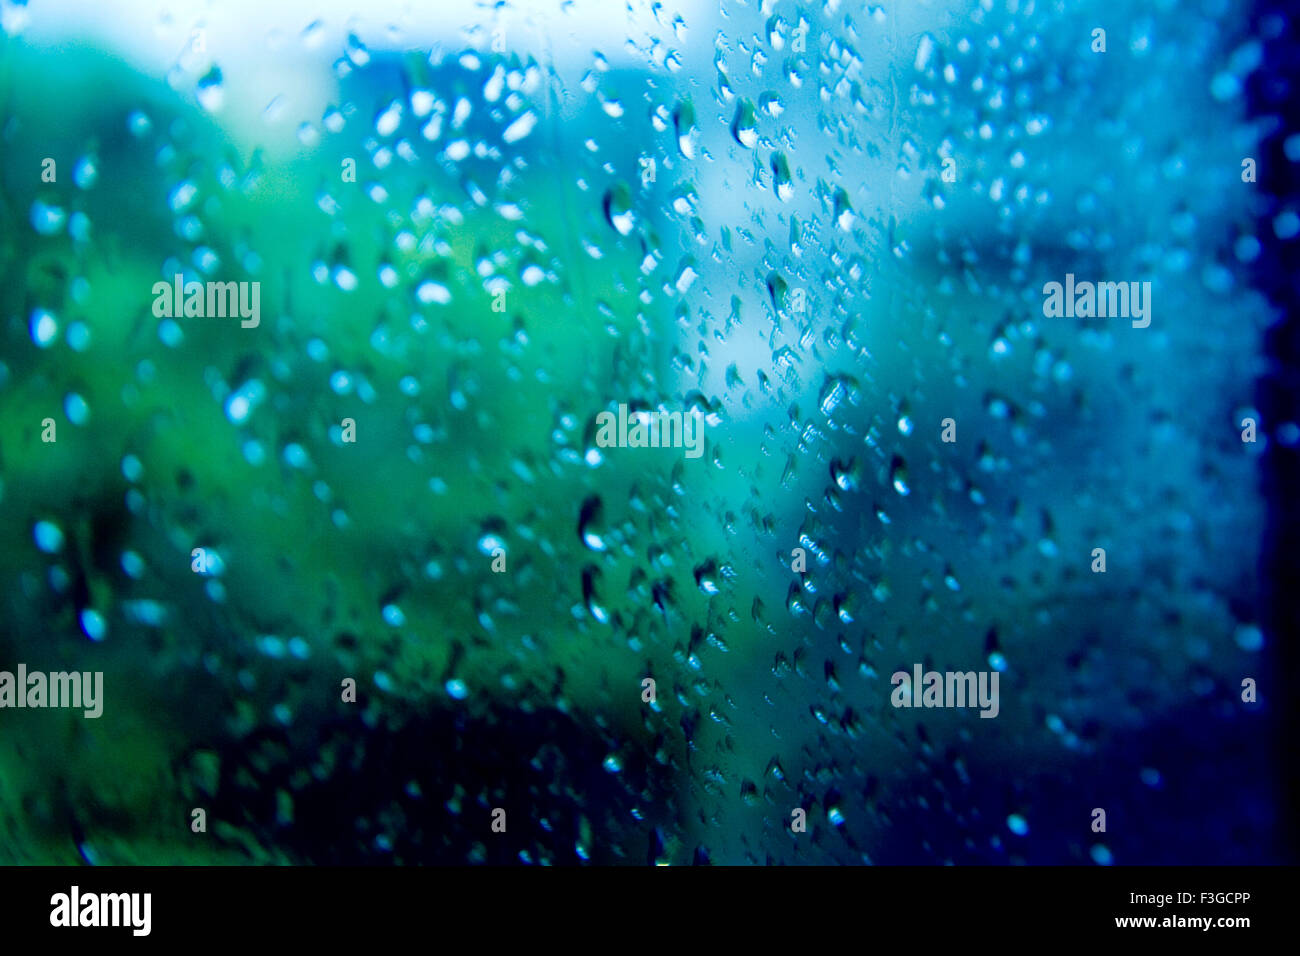 Dew drops on glass monsoon rainy season Stock Photo